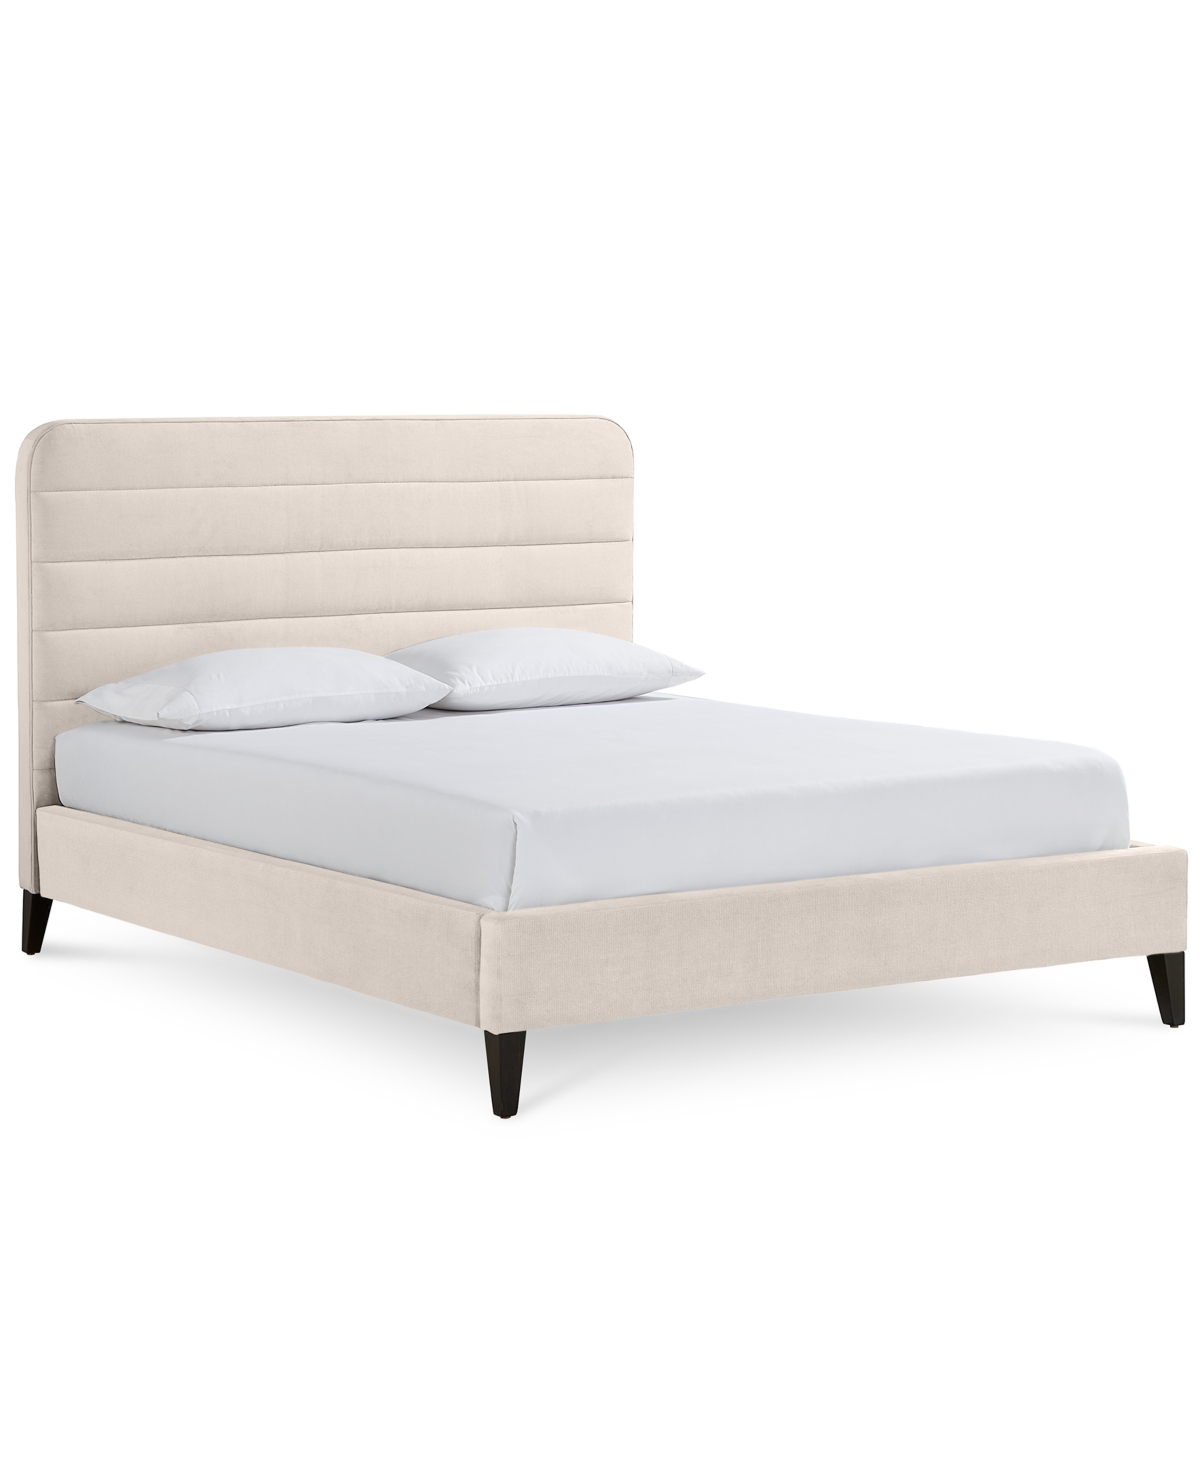 Furniture Haryan Upholstered King Bed In Creme